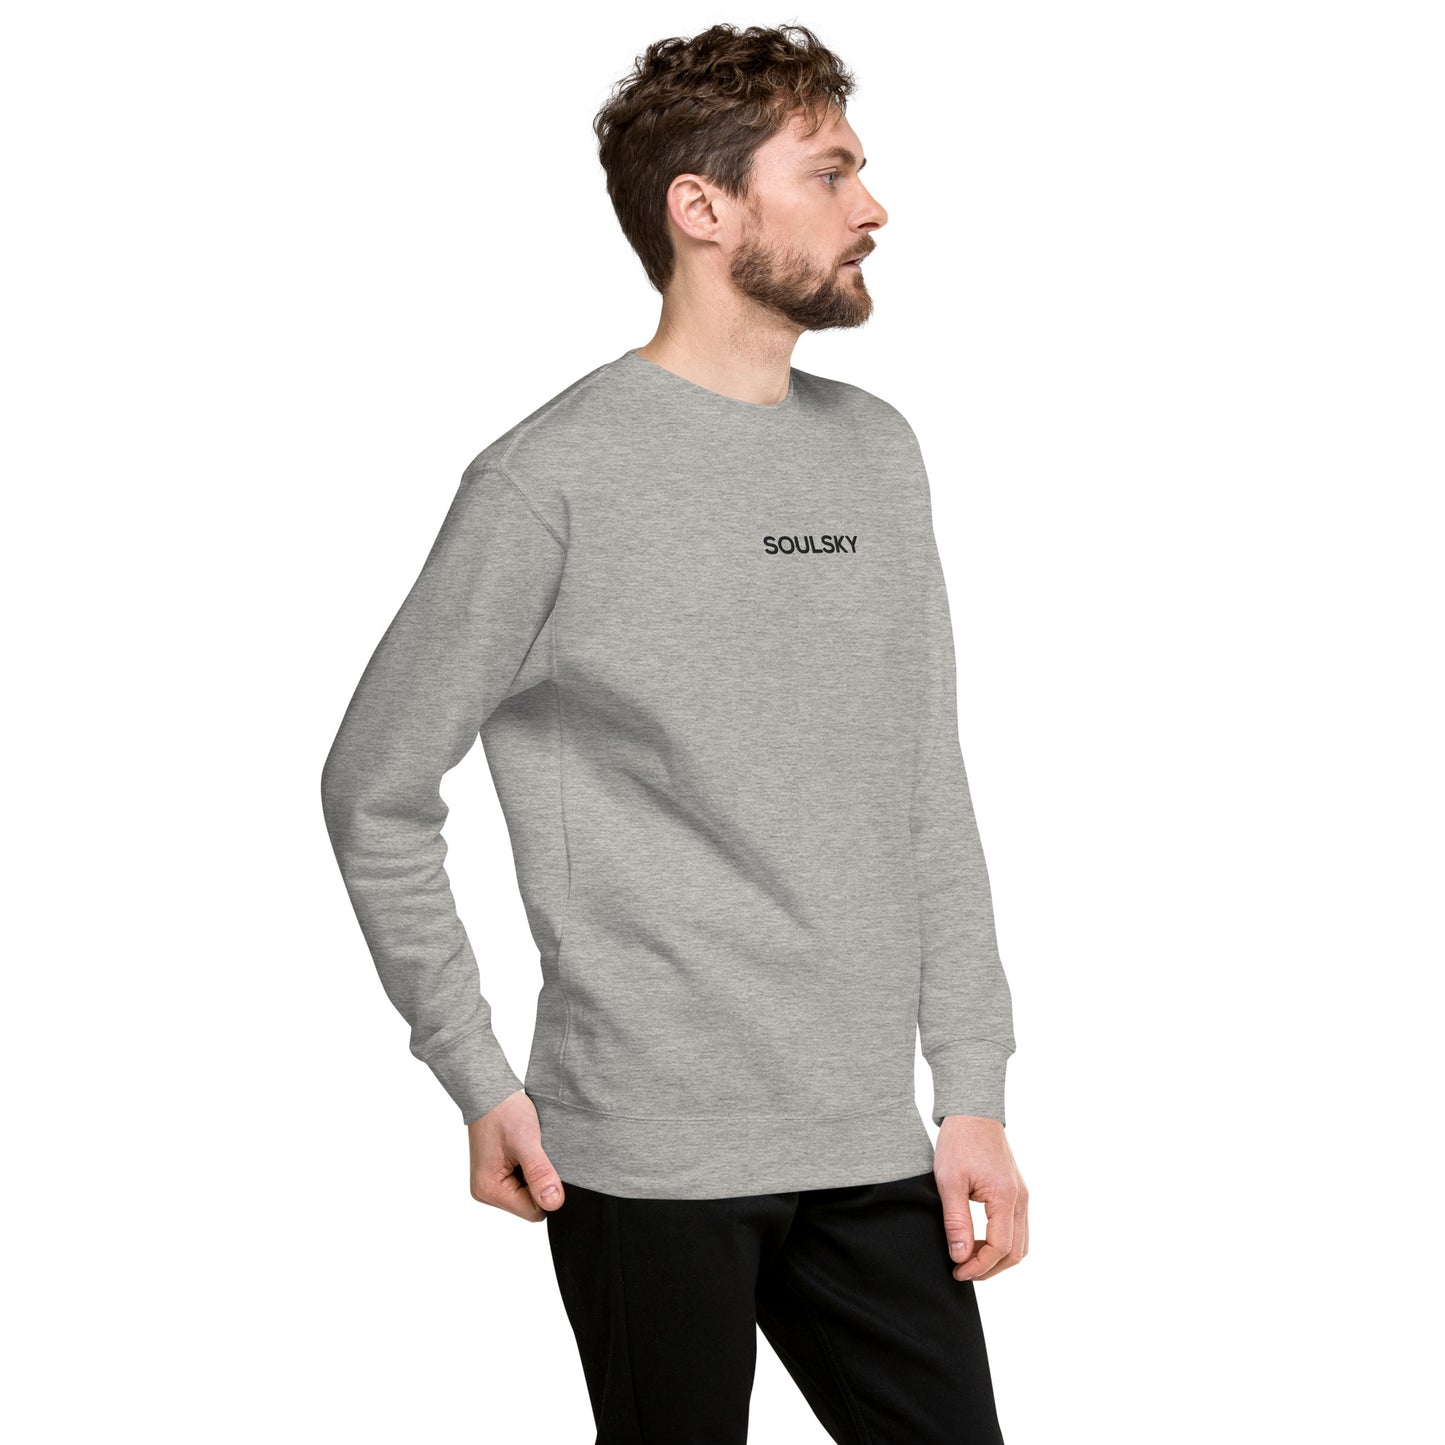 SOULSKY Classic Crew Sweatshirt - Light Gray